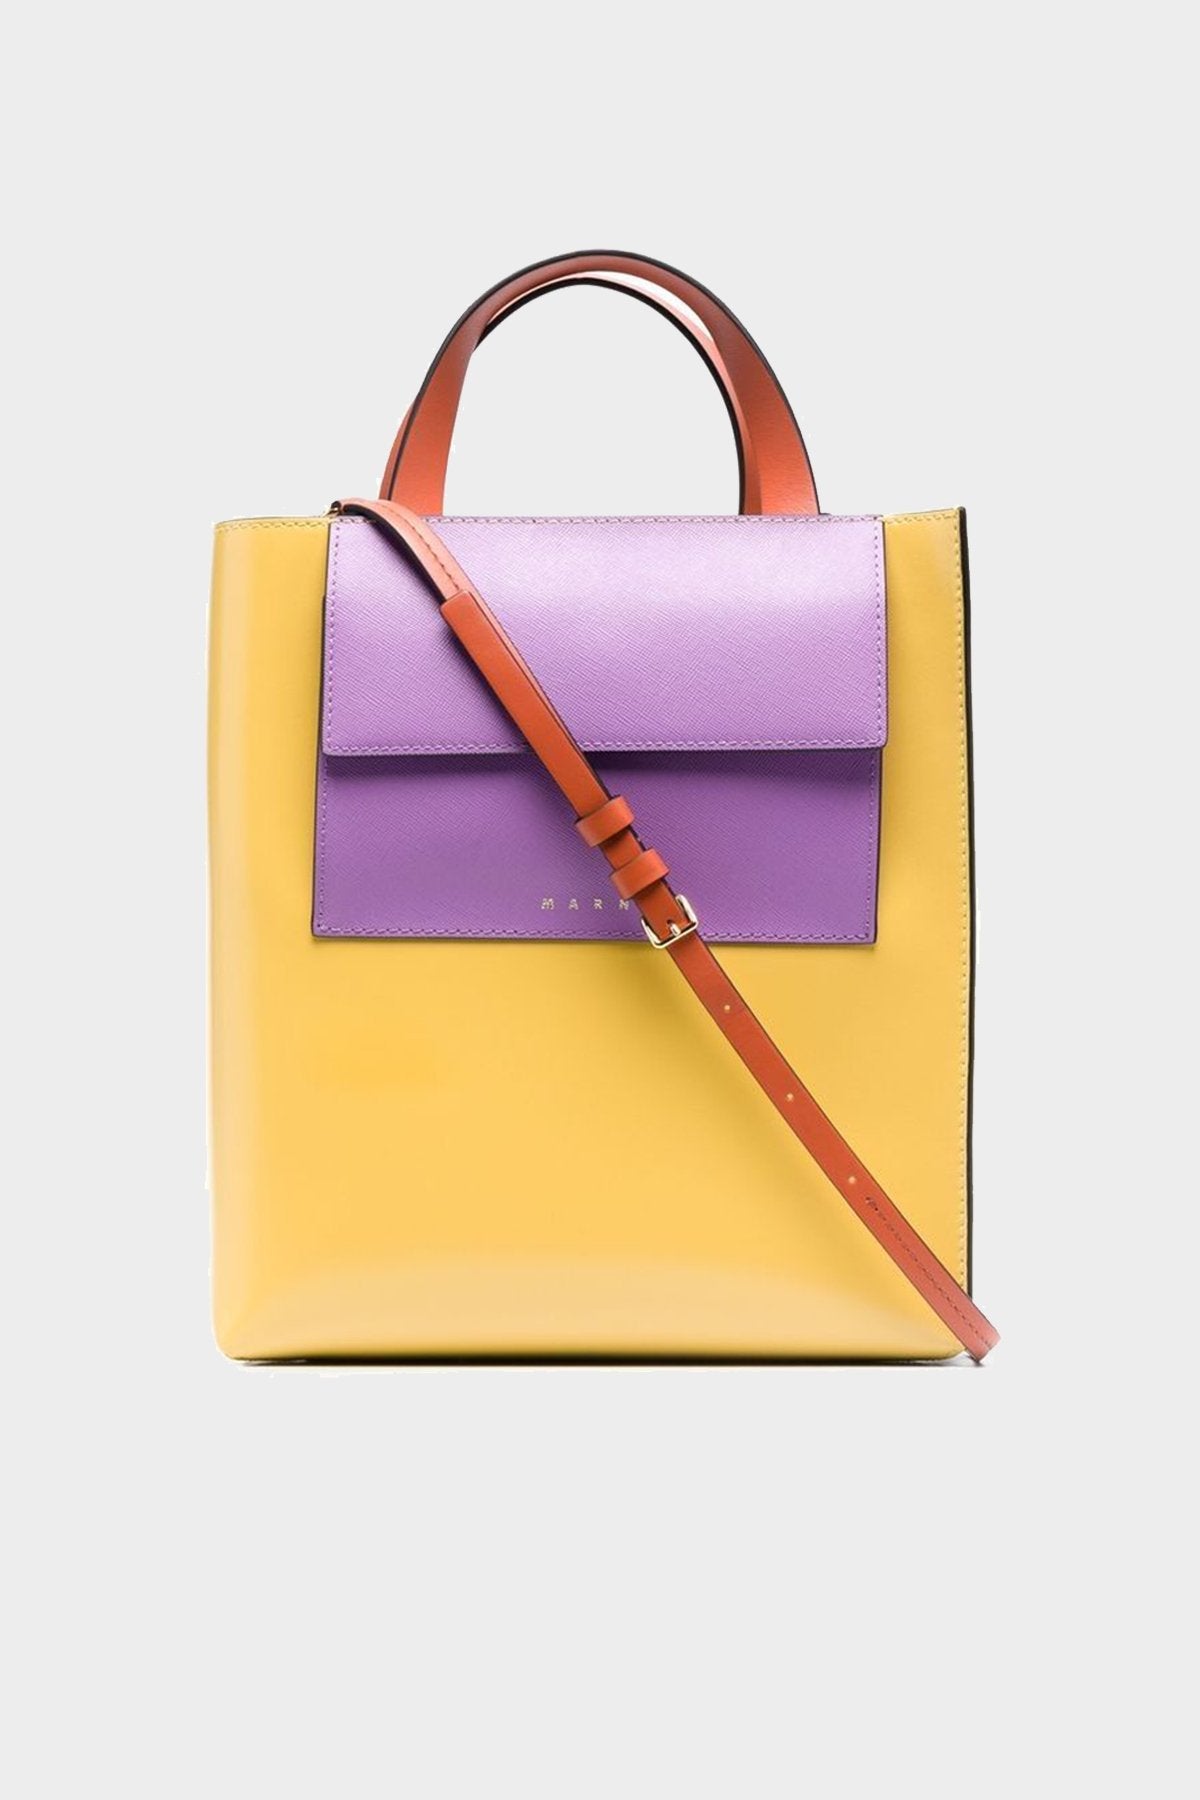 Mustard Museo Leather Bag with Purple Pocket - shop-olivia.com